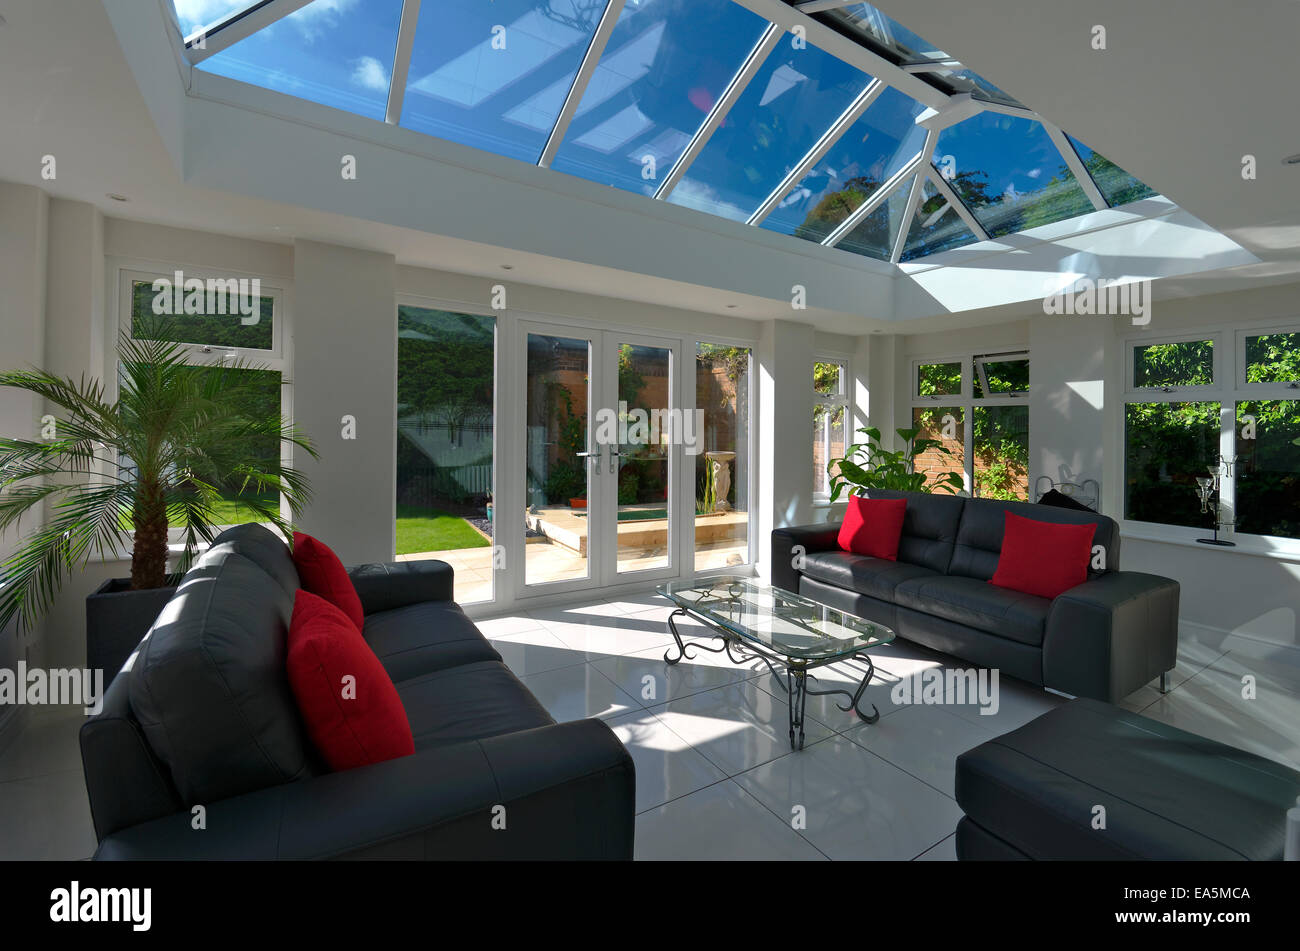 Orangery style conservatory interior home improvement Stock Photo